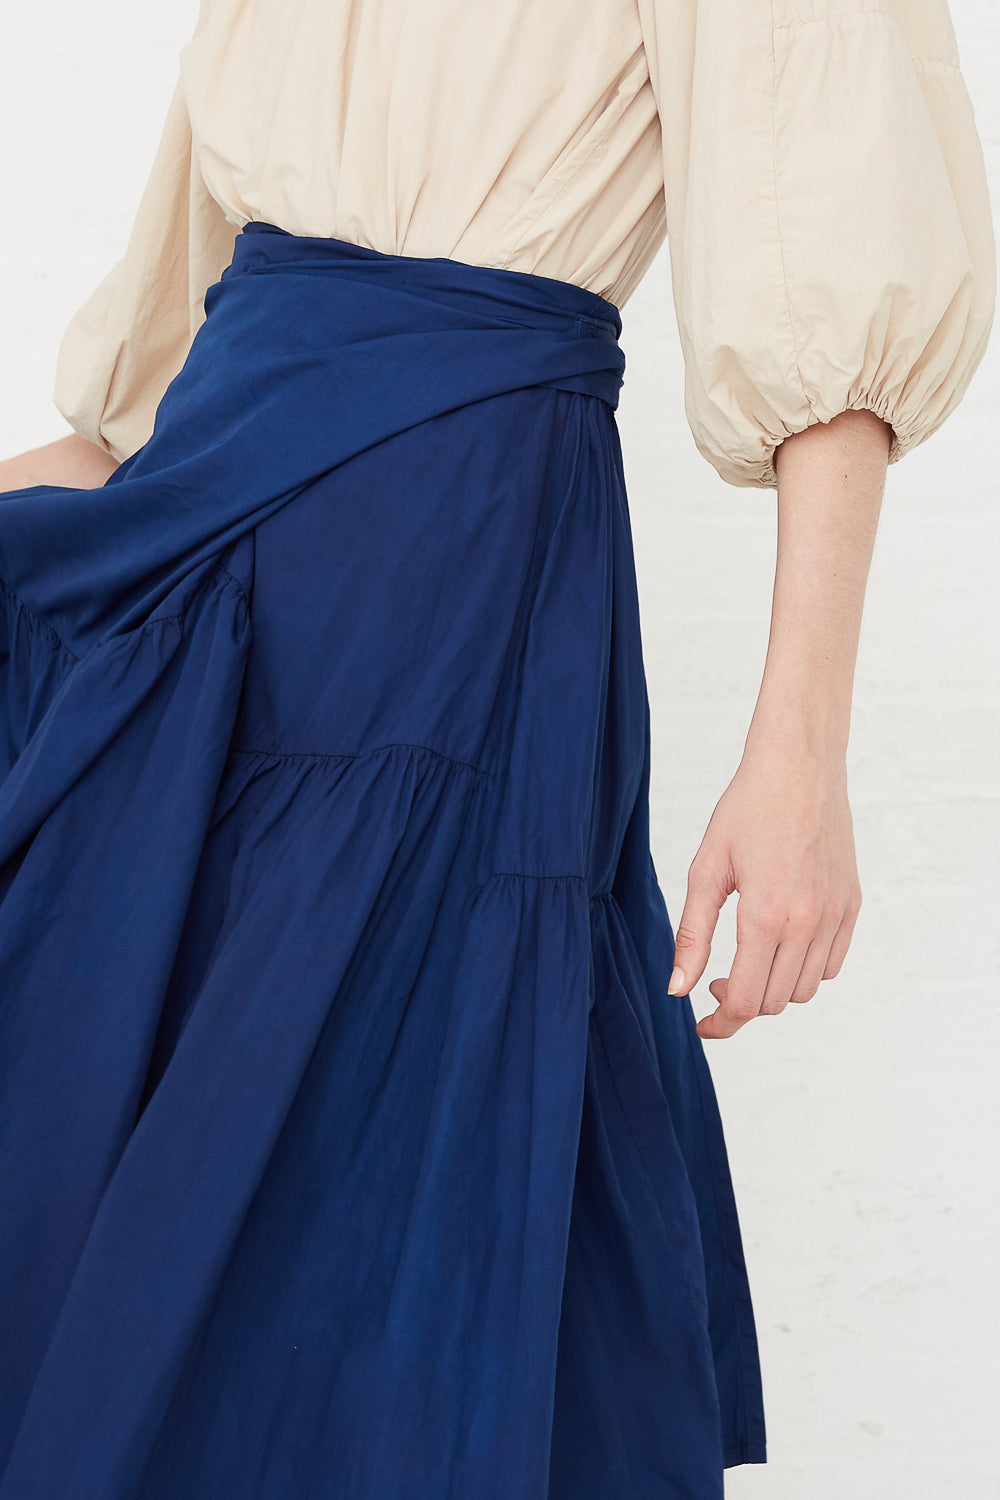 Cosmic Wonder - Suvin Cotton Broadcloth Wrapped Gather Skirt in Ryukyu Indigo front wrap detail